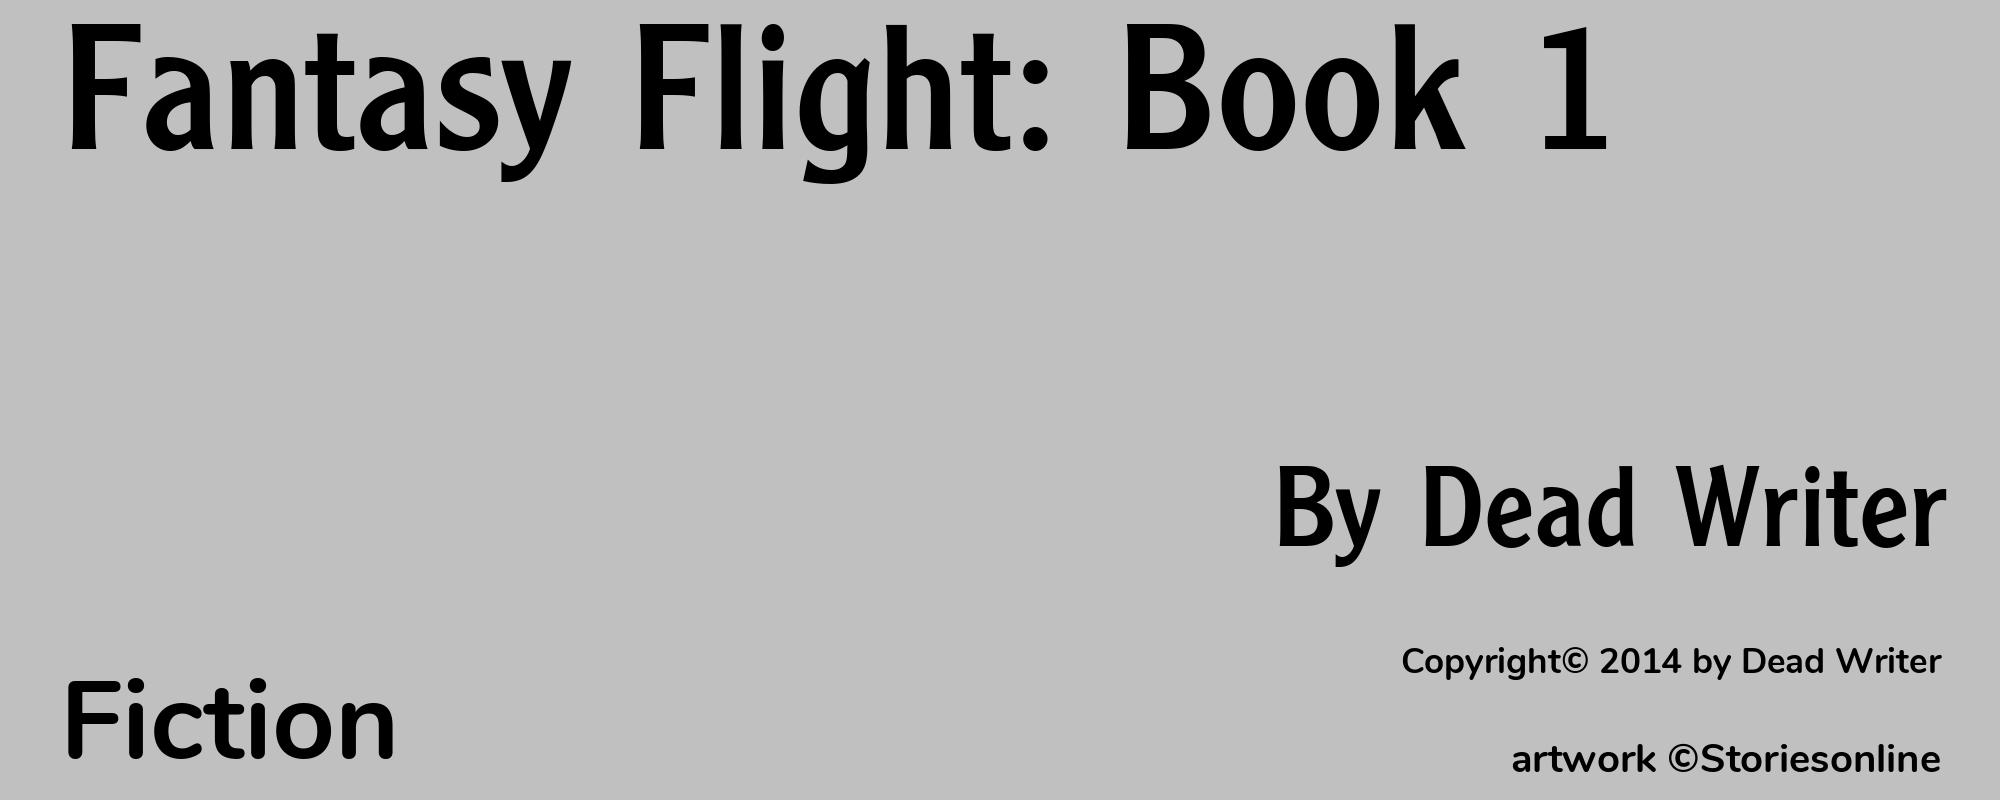 Fantasy Flight: Book 1 - Cover